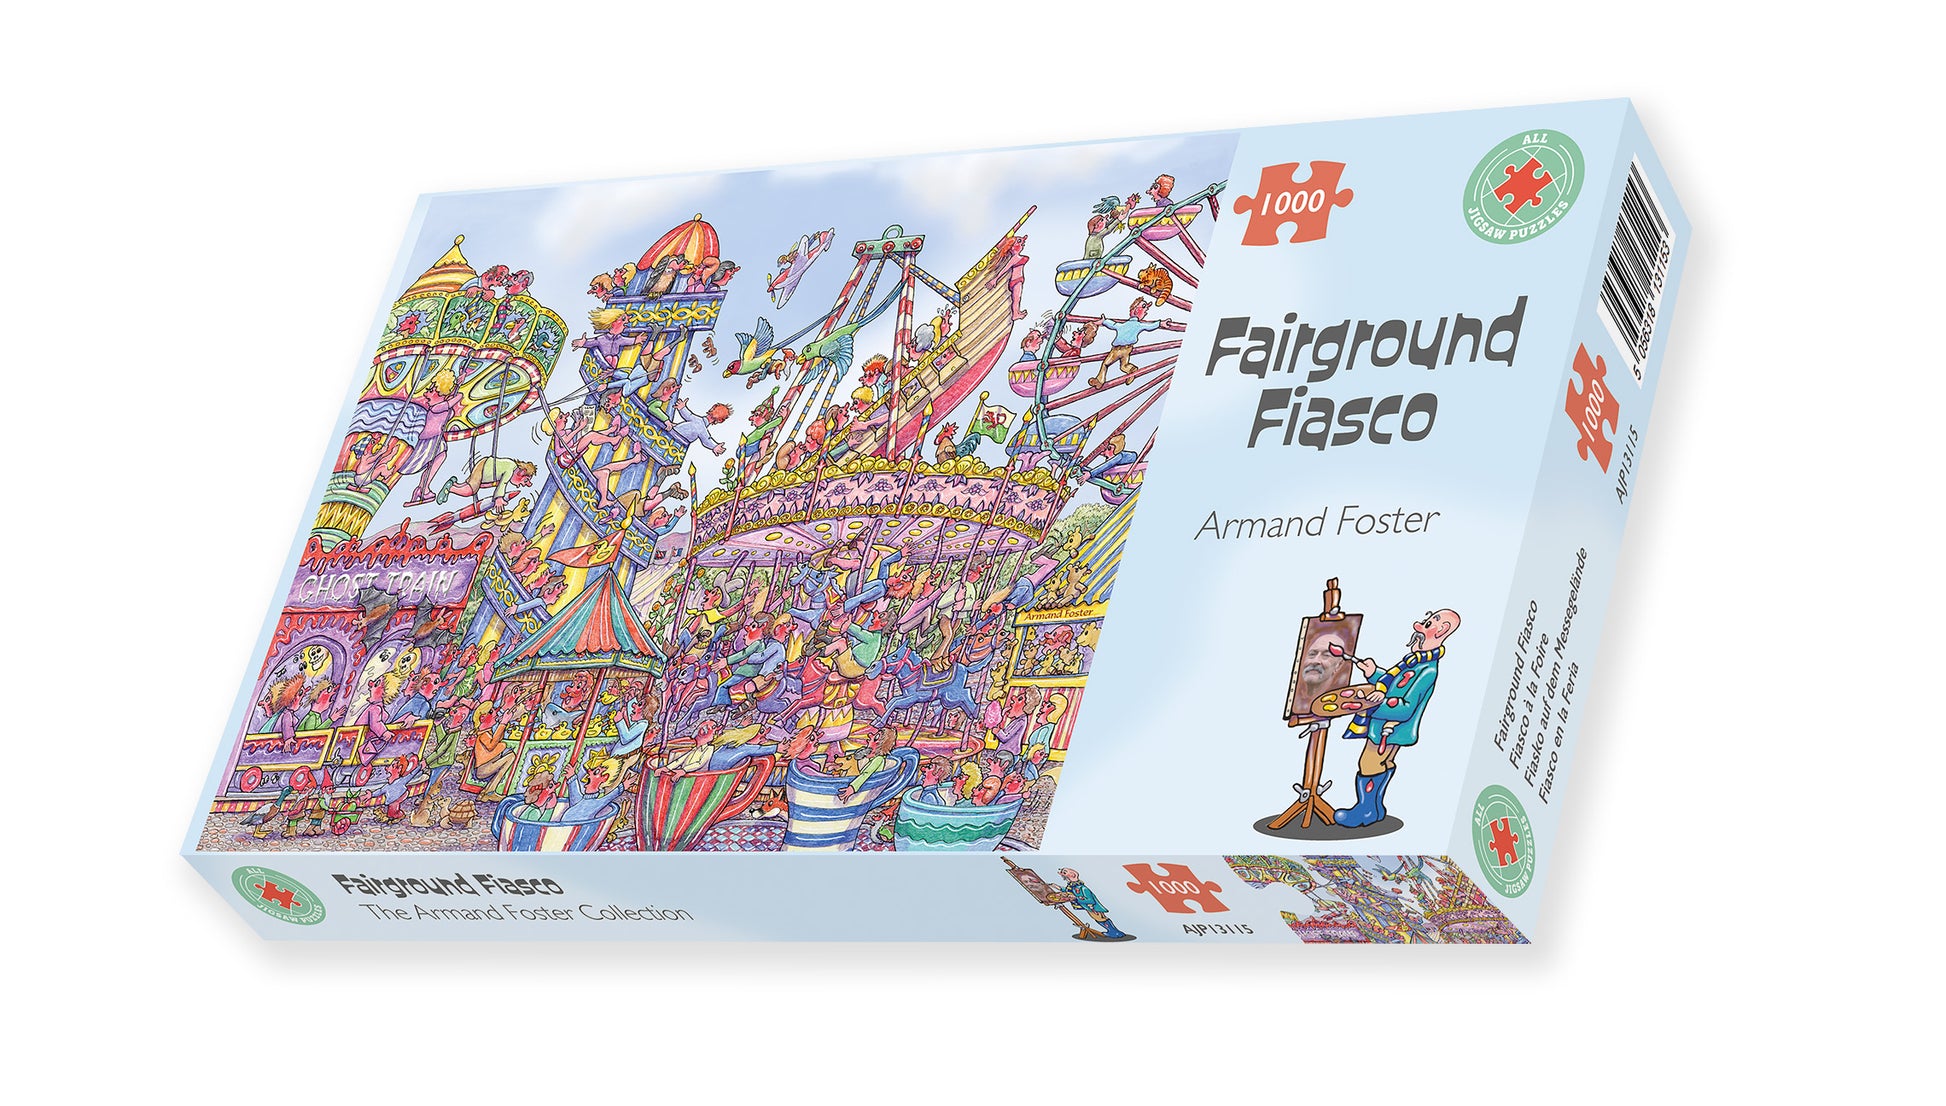 Fairground Fiasco 1000 Piece Jigsaw Puzzle box